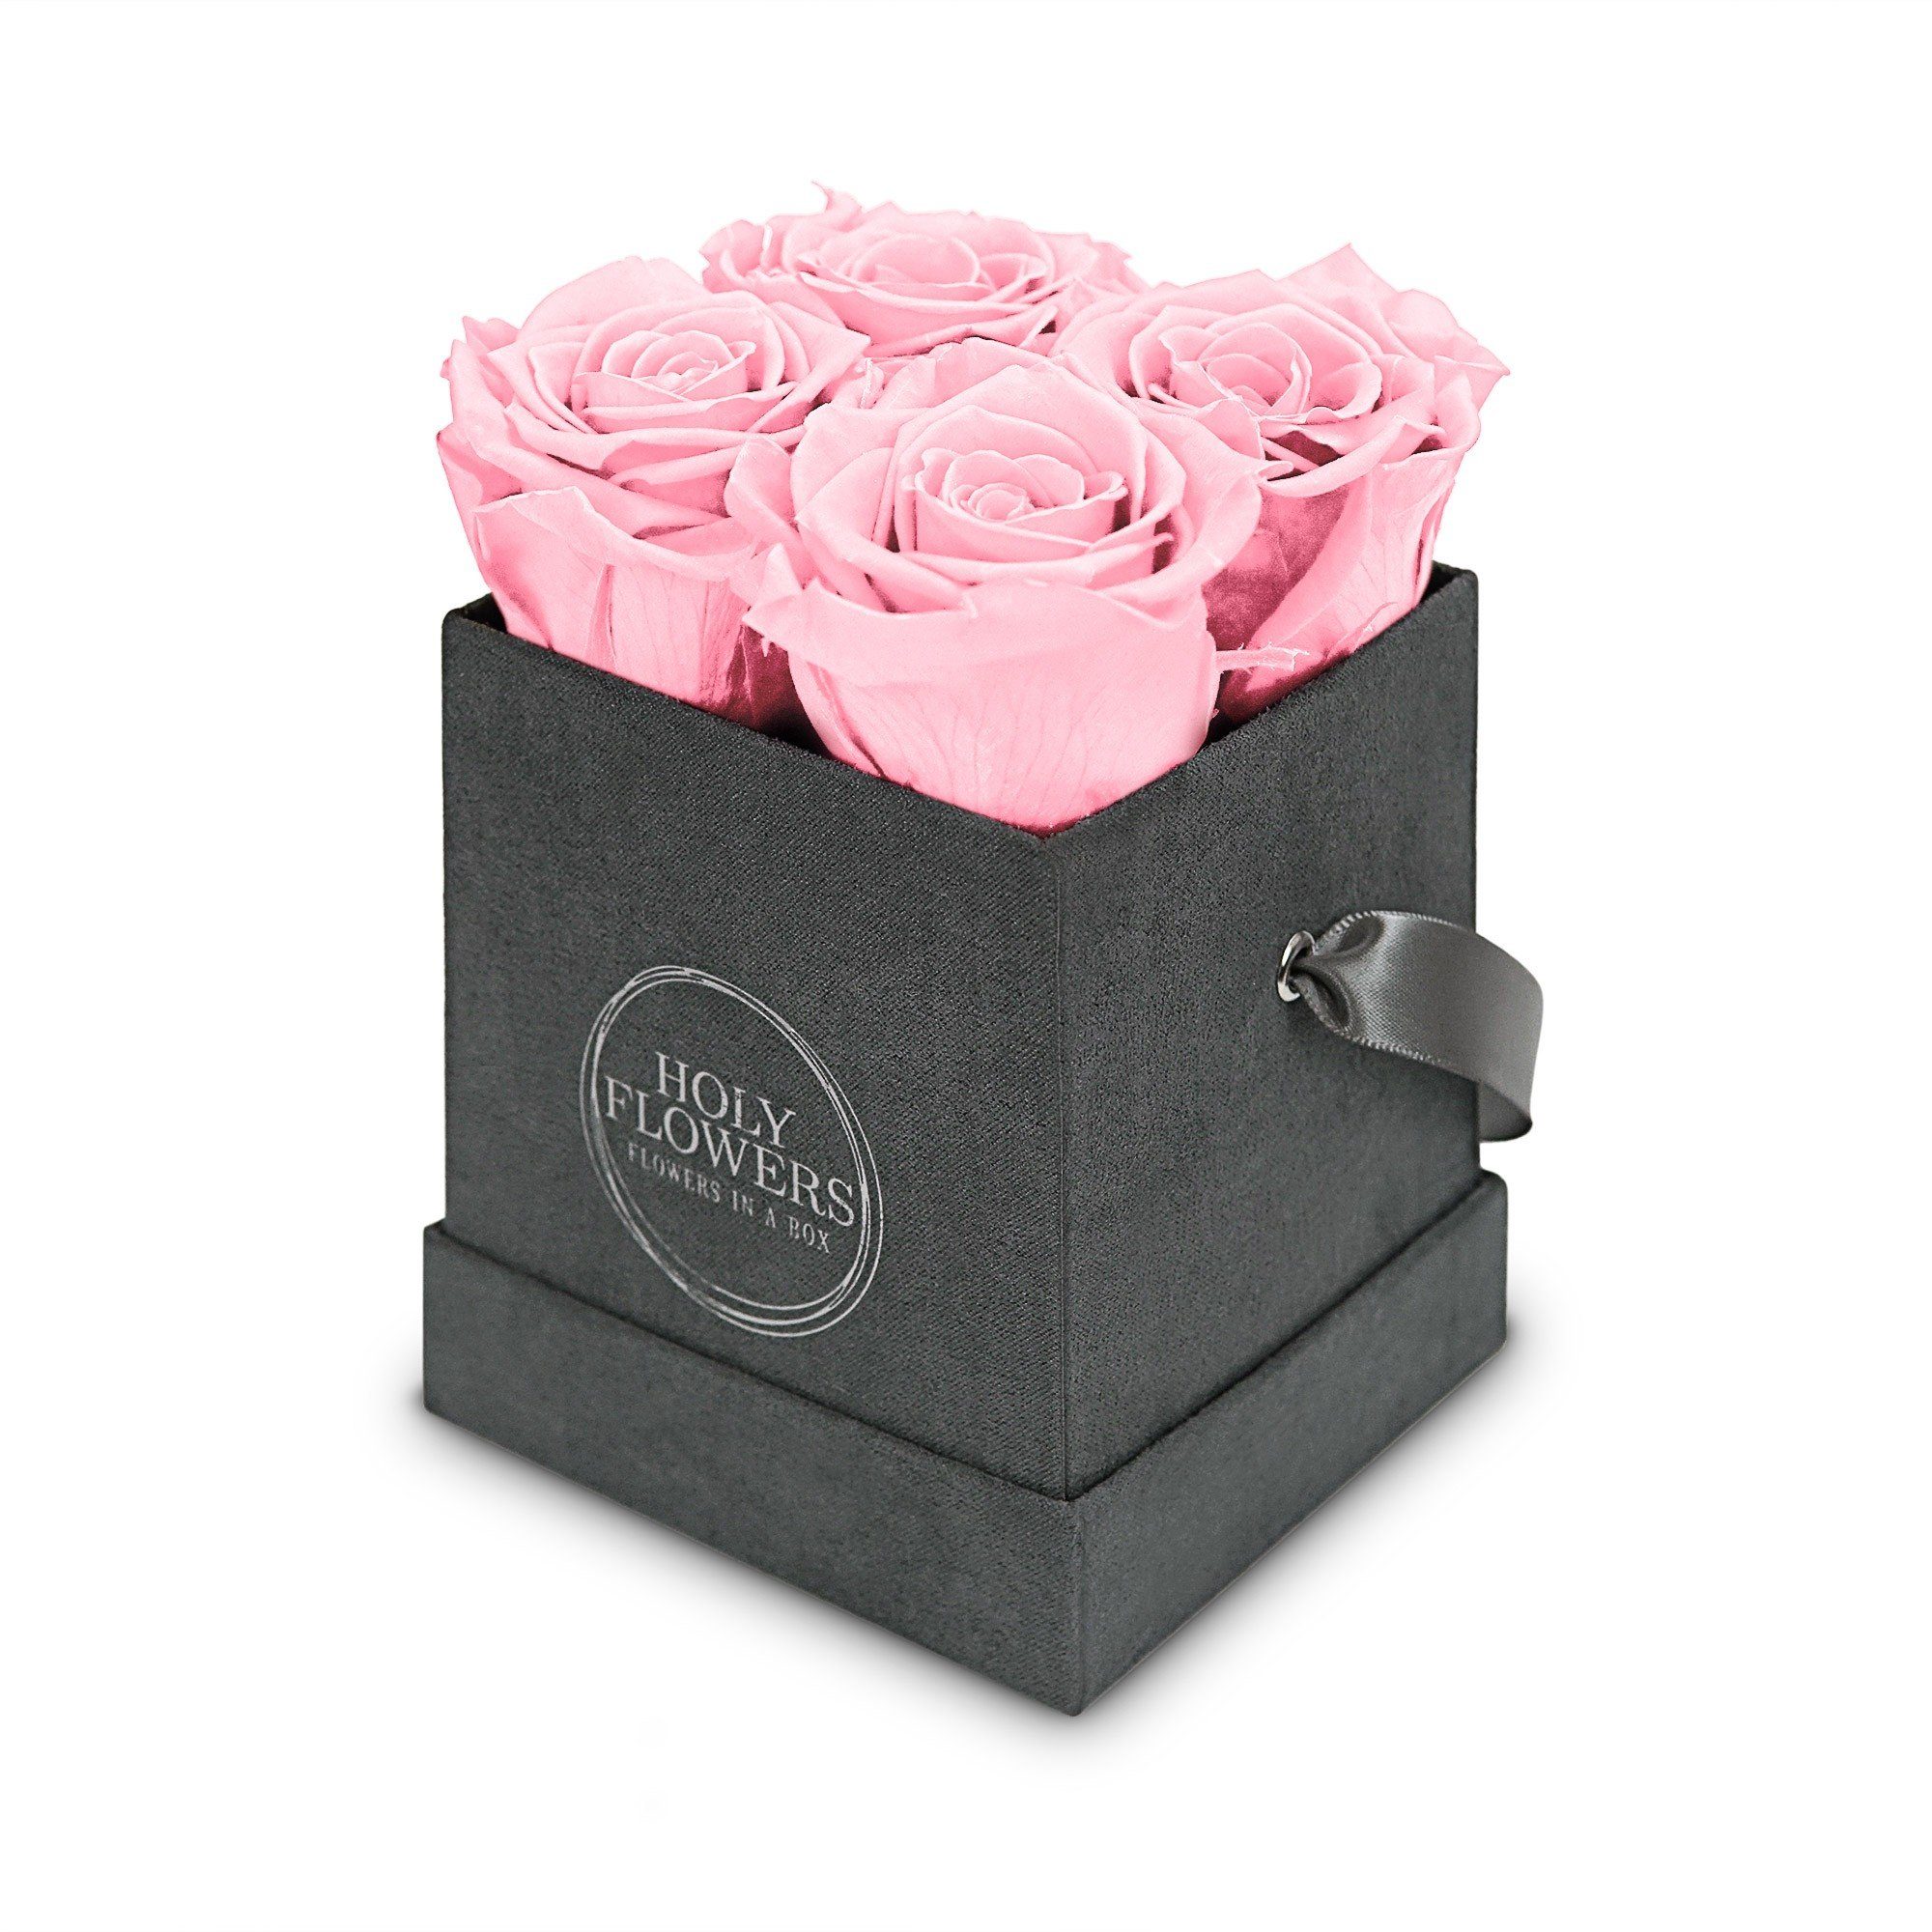 Kunstblume Eckige Rosenbox aus Samt mit 4-5 Infinity Rosen I 3 Jahre haltbar I Echte, duftende konservierte Blumen I by Raul Richter Infinity Rose, Holy Flowers, Höhe 11 cm Pink Blush